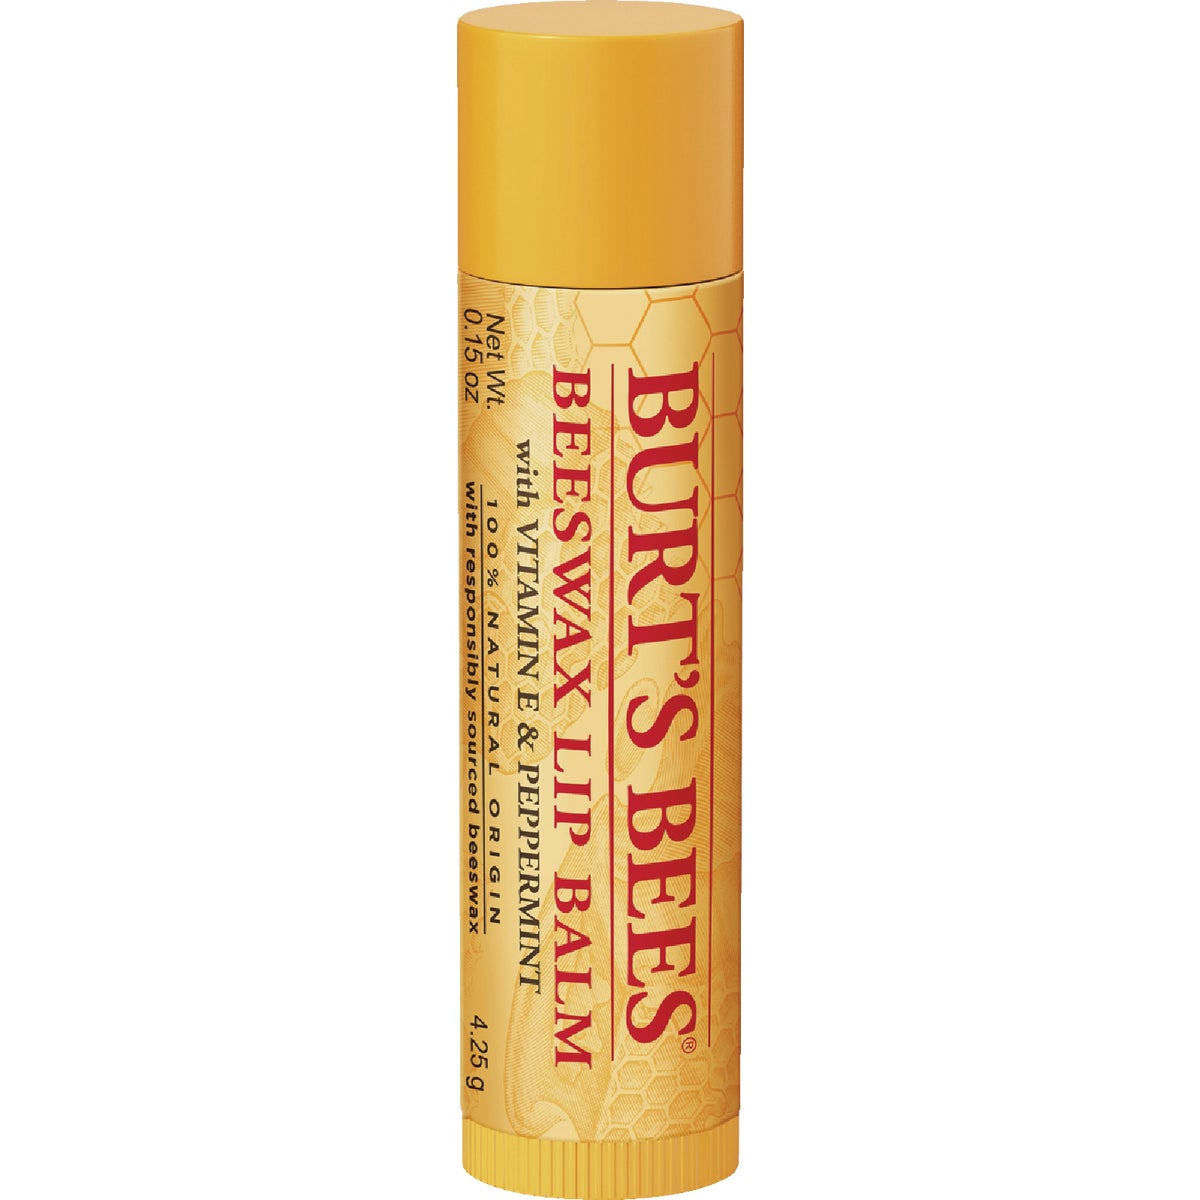 Burt's Bees Beeswax Lip Balm (Single Pack)